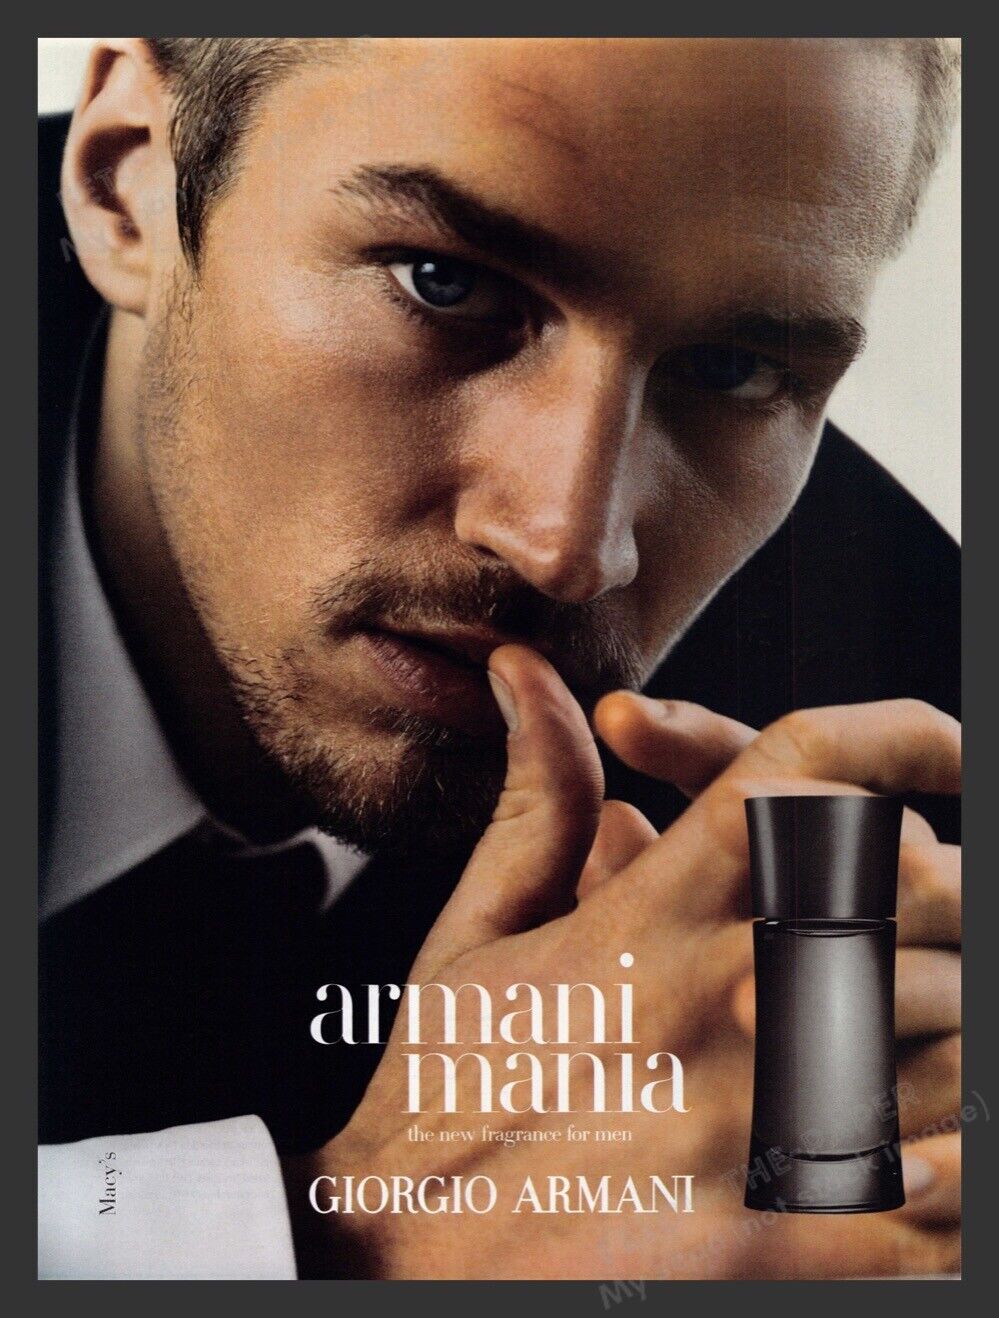 Giorgio Armani Mania Fragrance Paul Walker 2000s Print Advertisement Ad 2002